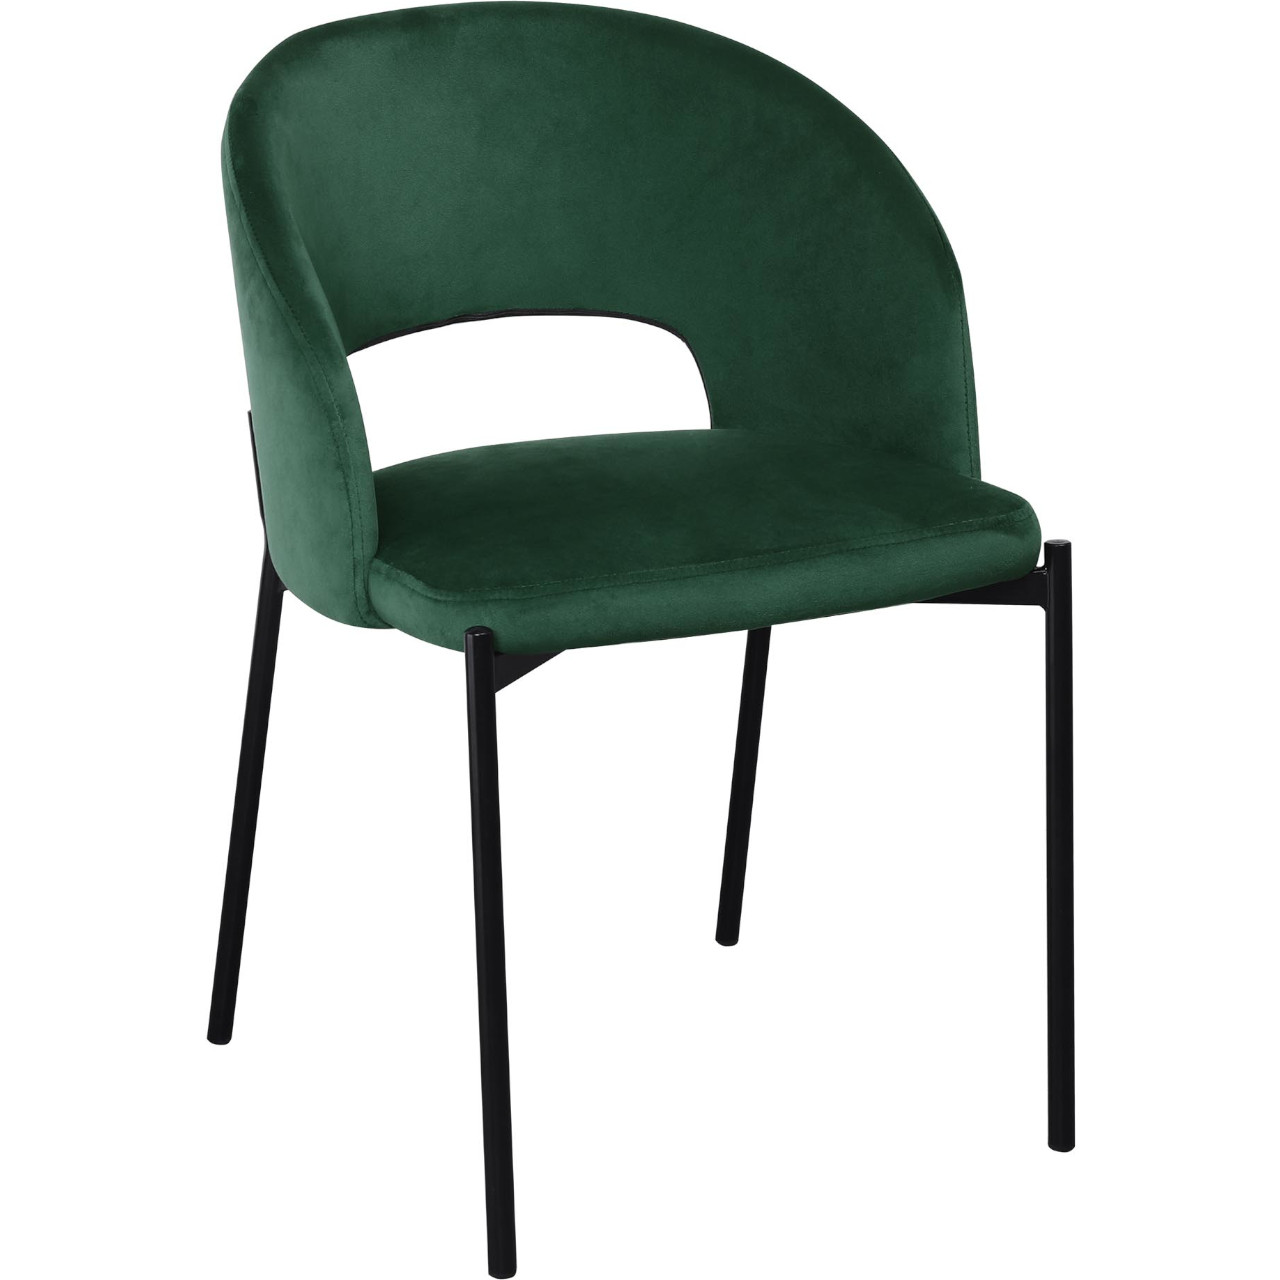 Chair K455 dark green